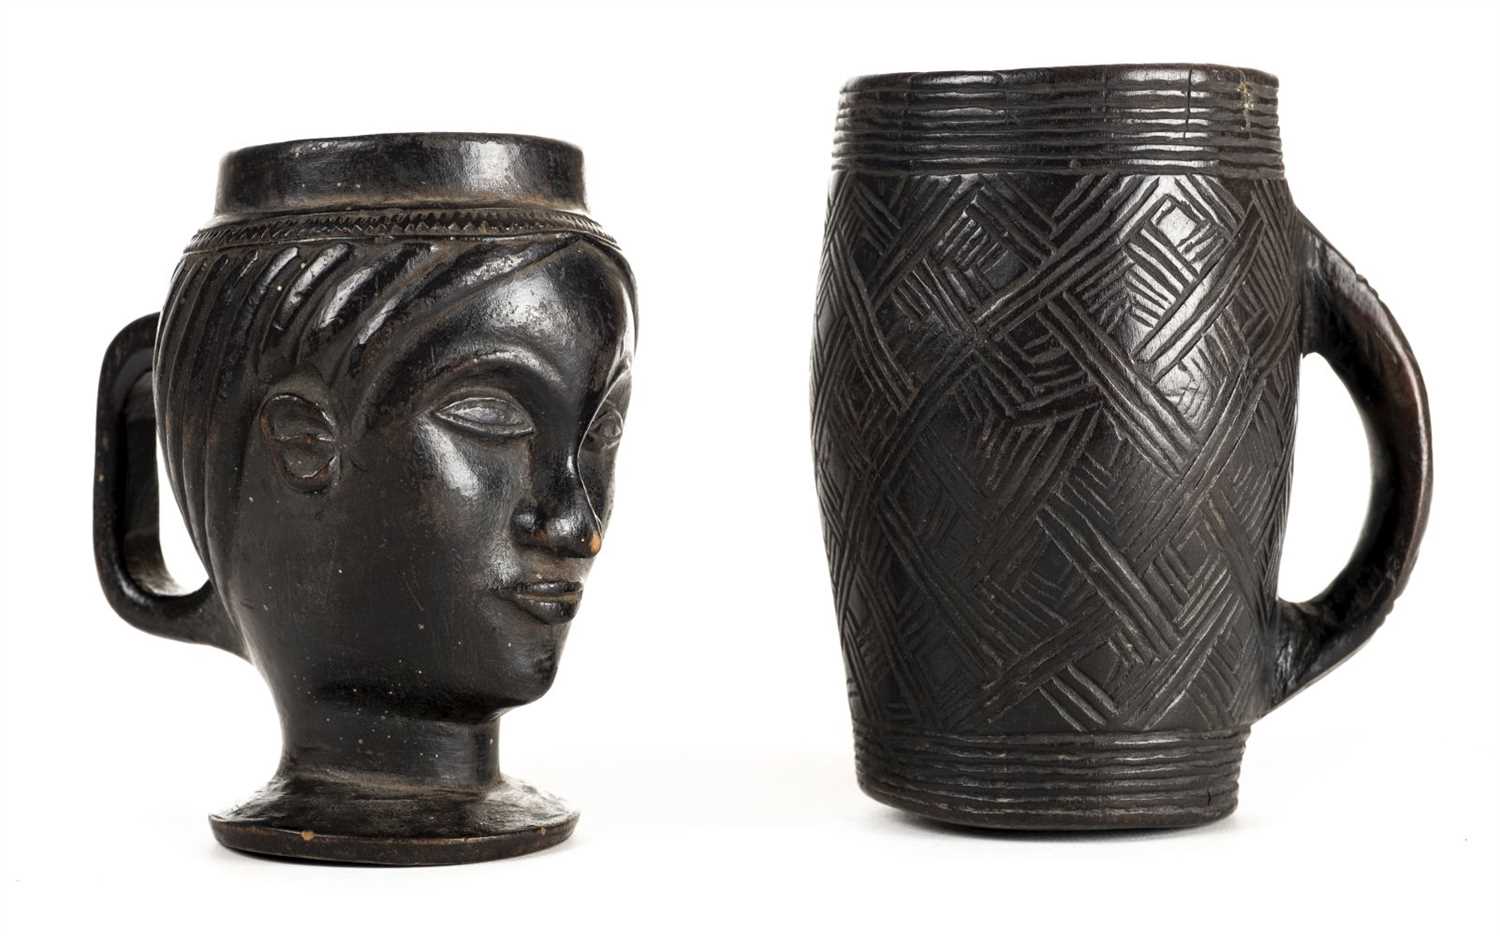 Lot 109 - Kuba. Two Kuba, Republic of Congo wooden cups